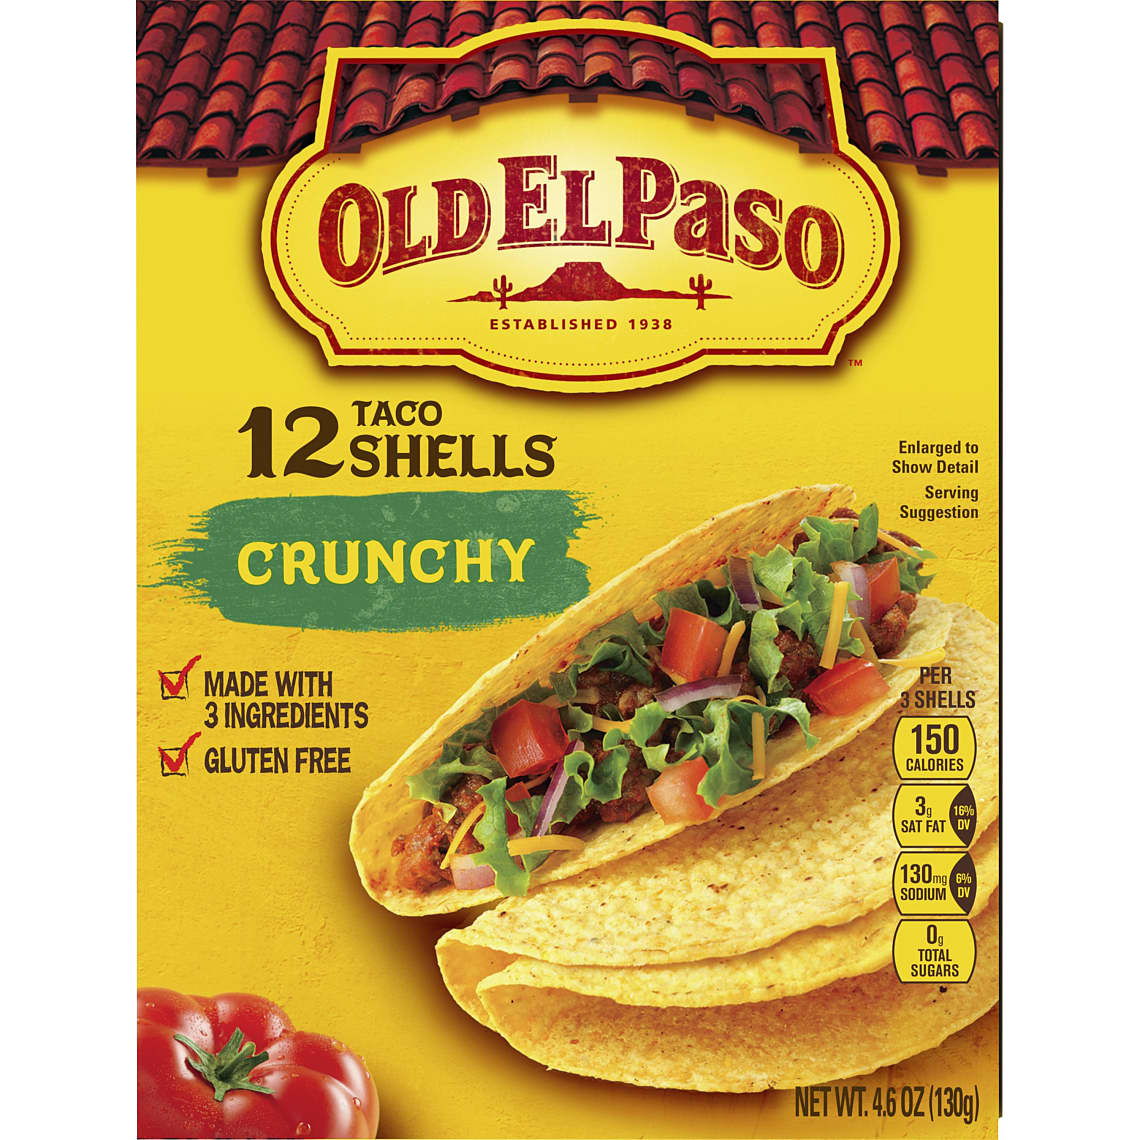 Classic Crunchy Taco Shells - Gluten Free - Old El Paso